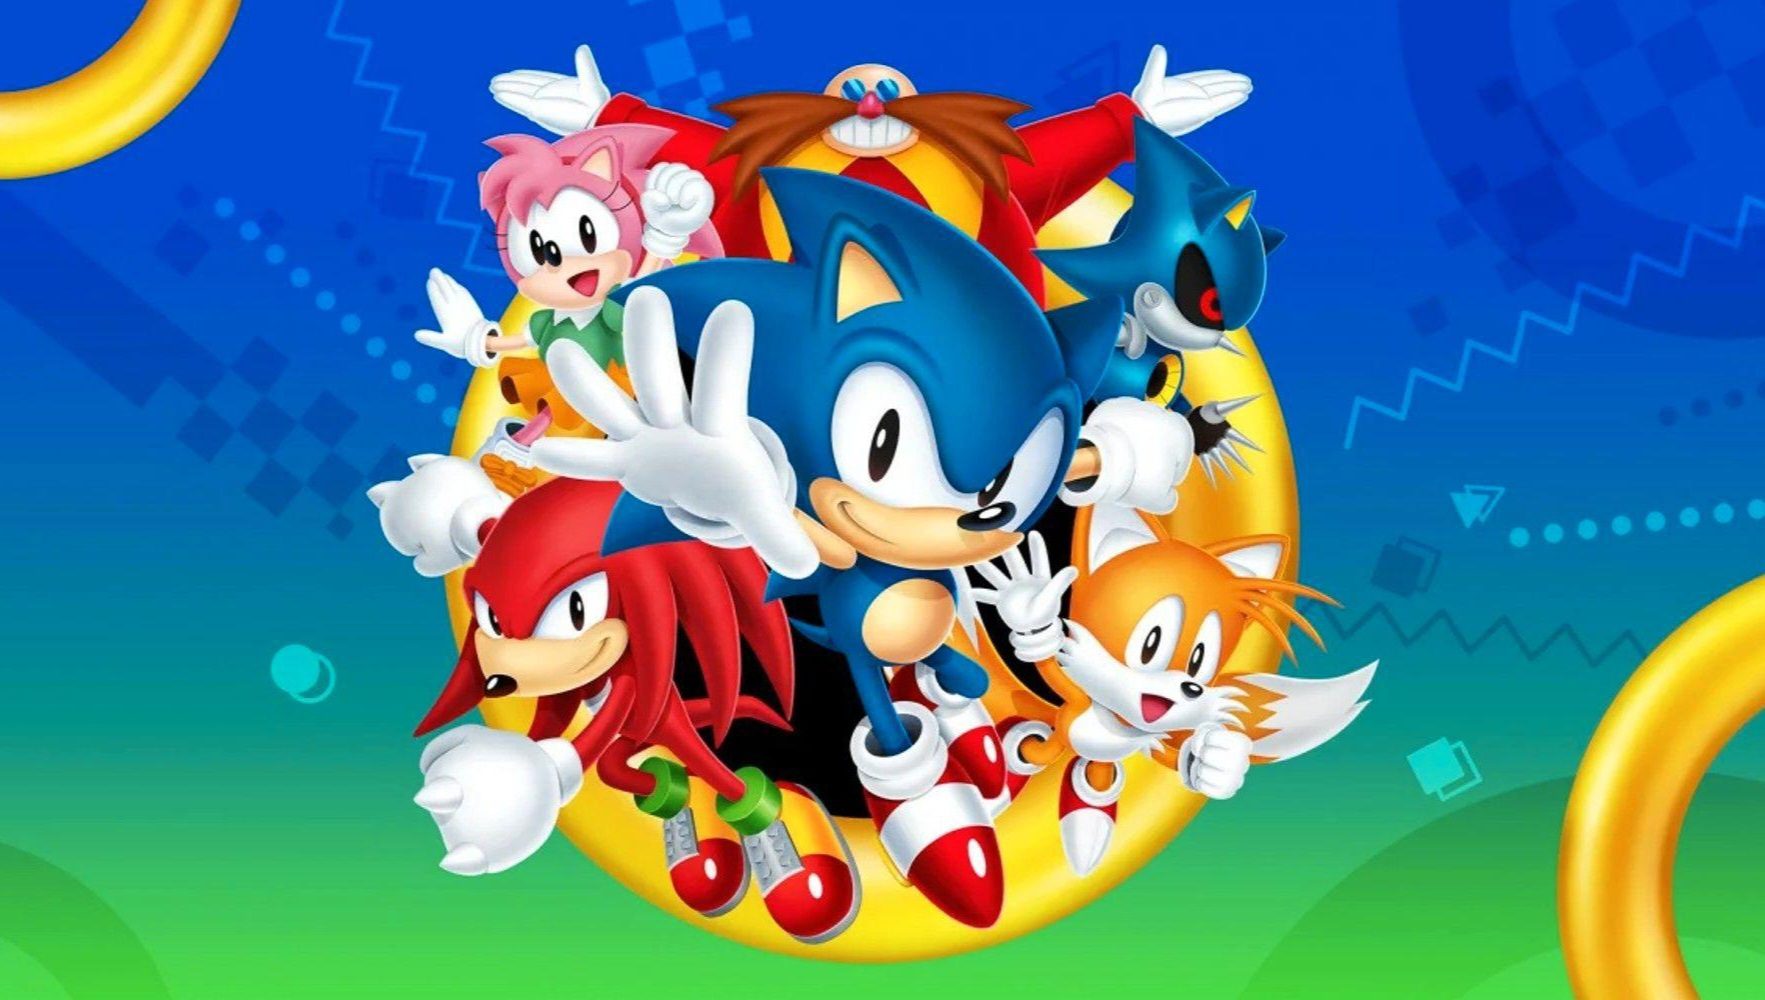 SEGA anuncia Sonic Origins Plus  TechBreak - Tudo sobre Tecnologia